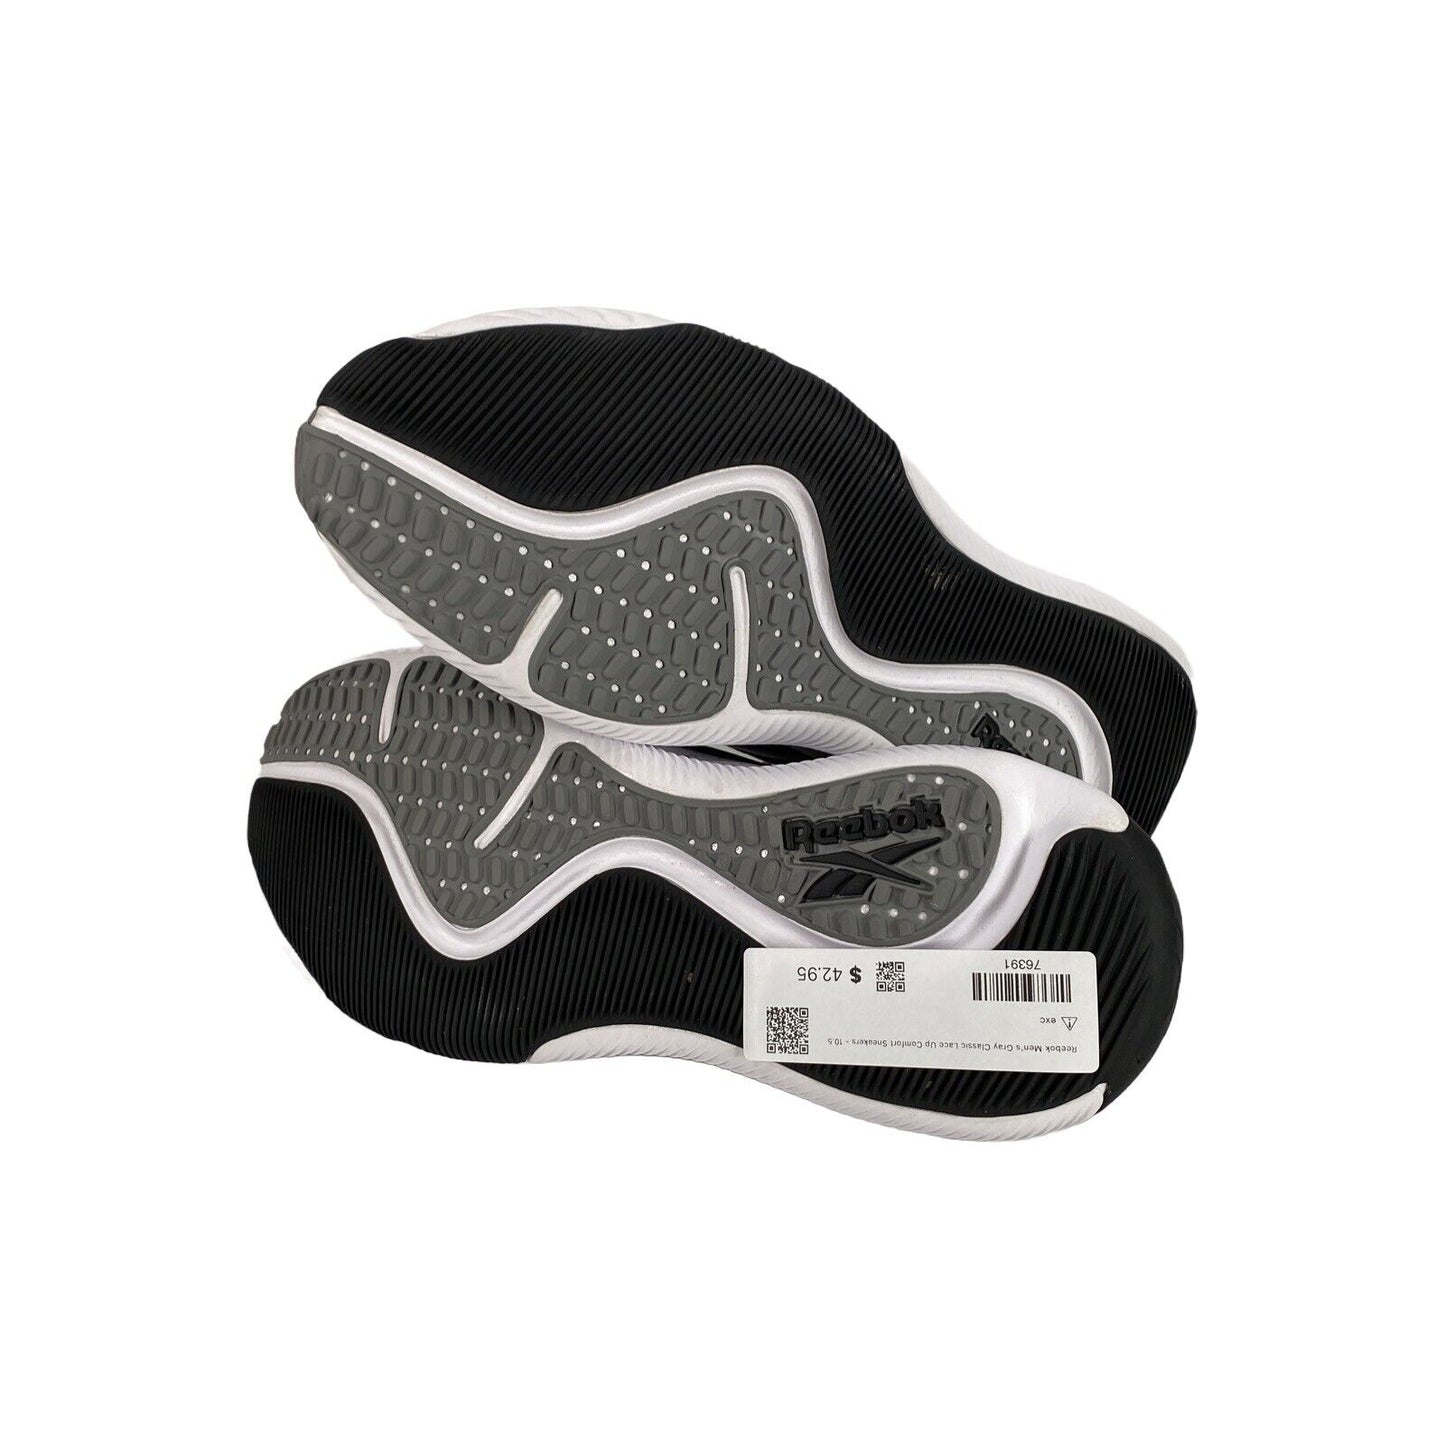 Reebok Men's Gray Classic Lace Up Comfort Sneakers - 10.5